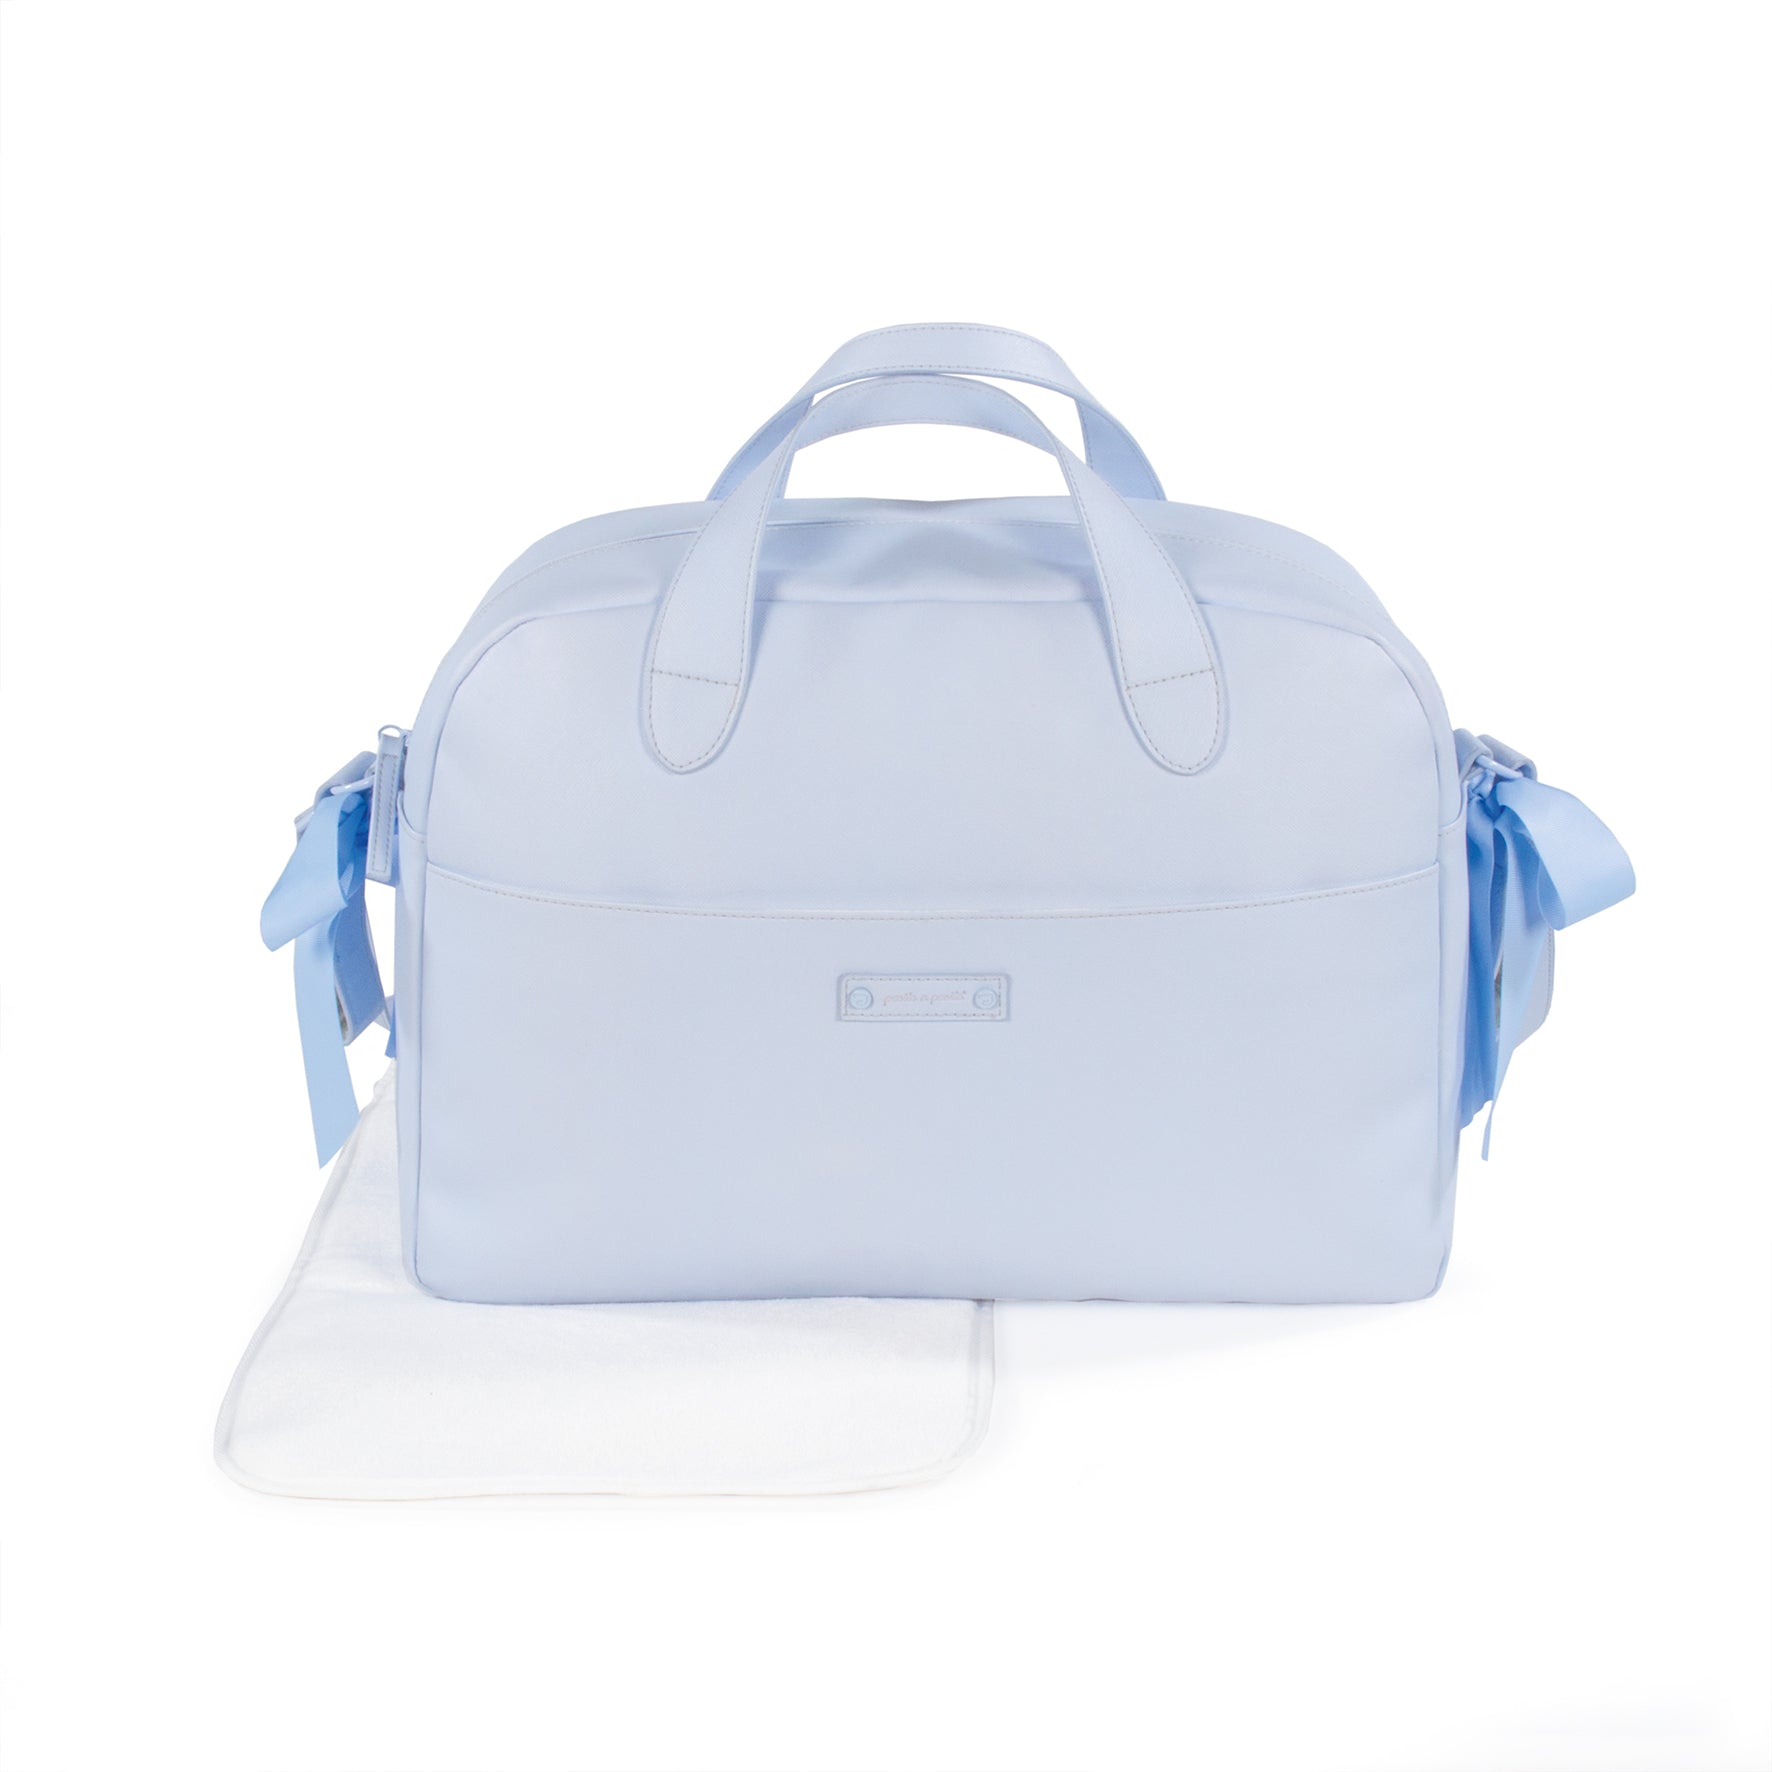 Pasito a Pasito Essentials Blue Diaper Changing Bag